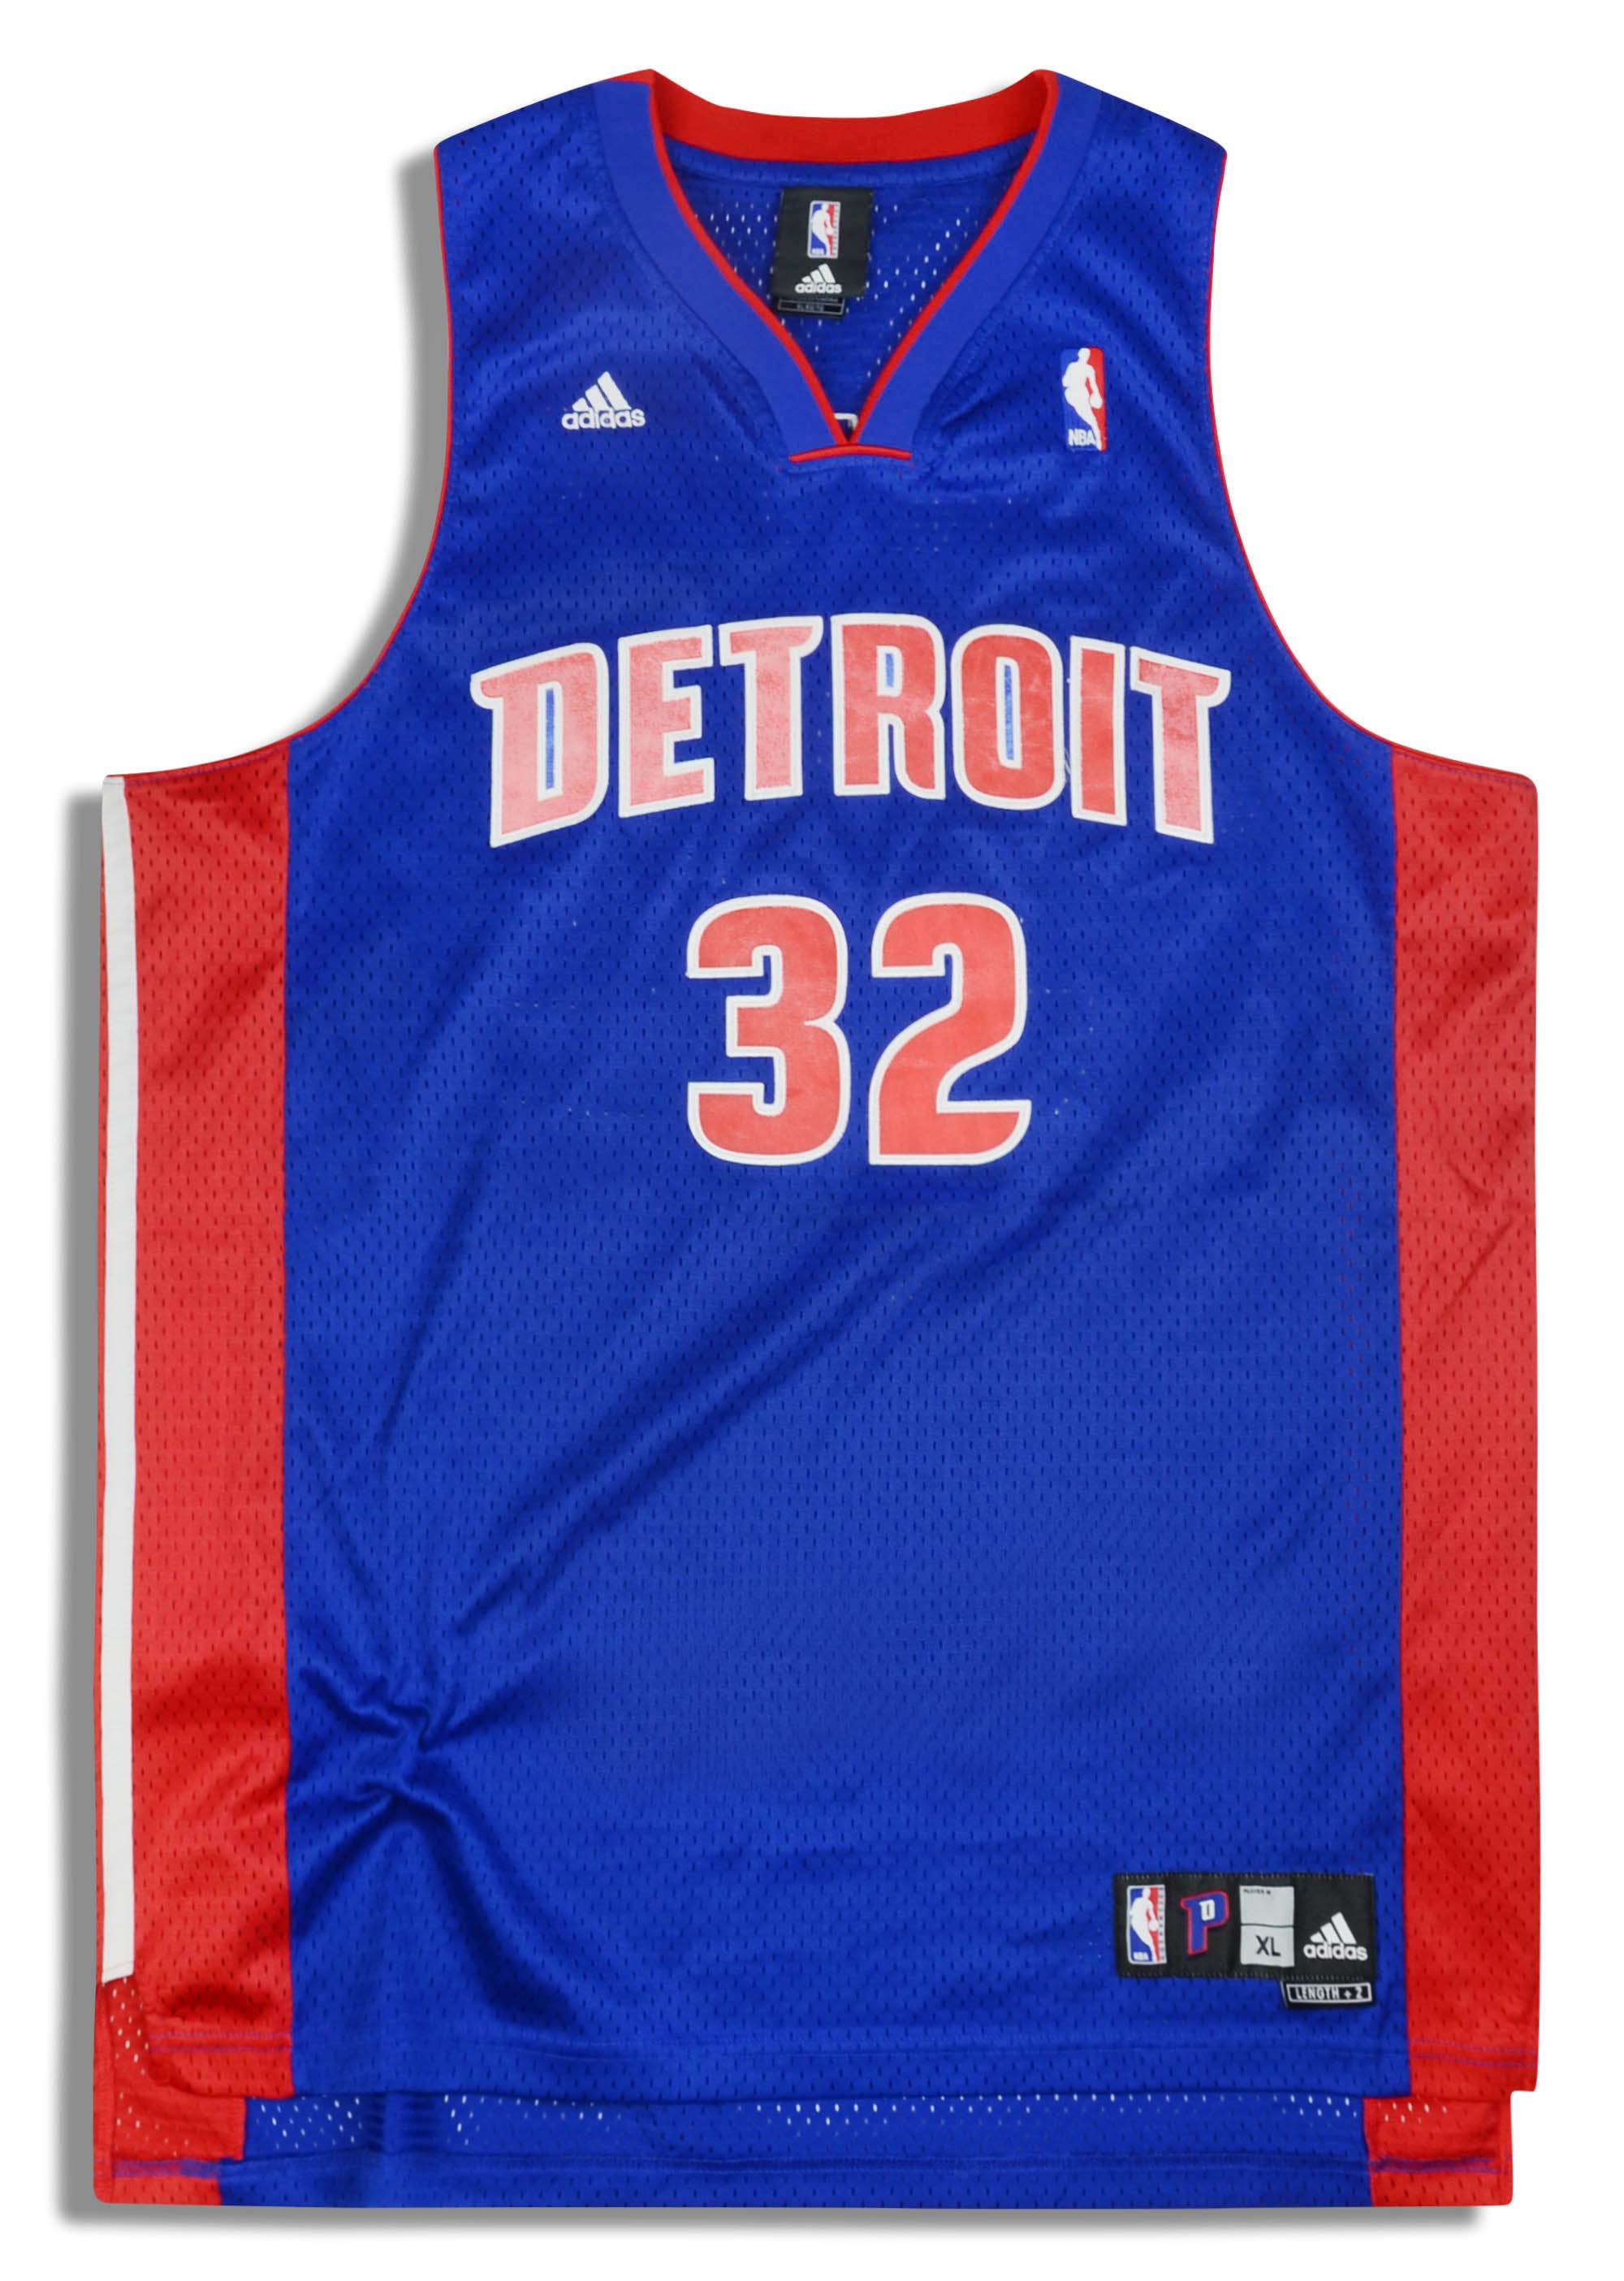 Pistons retire Richard Hamilton's number 32 jersey